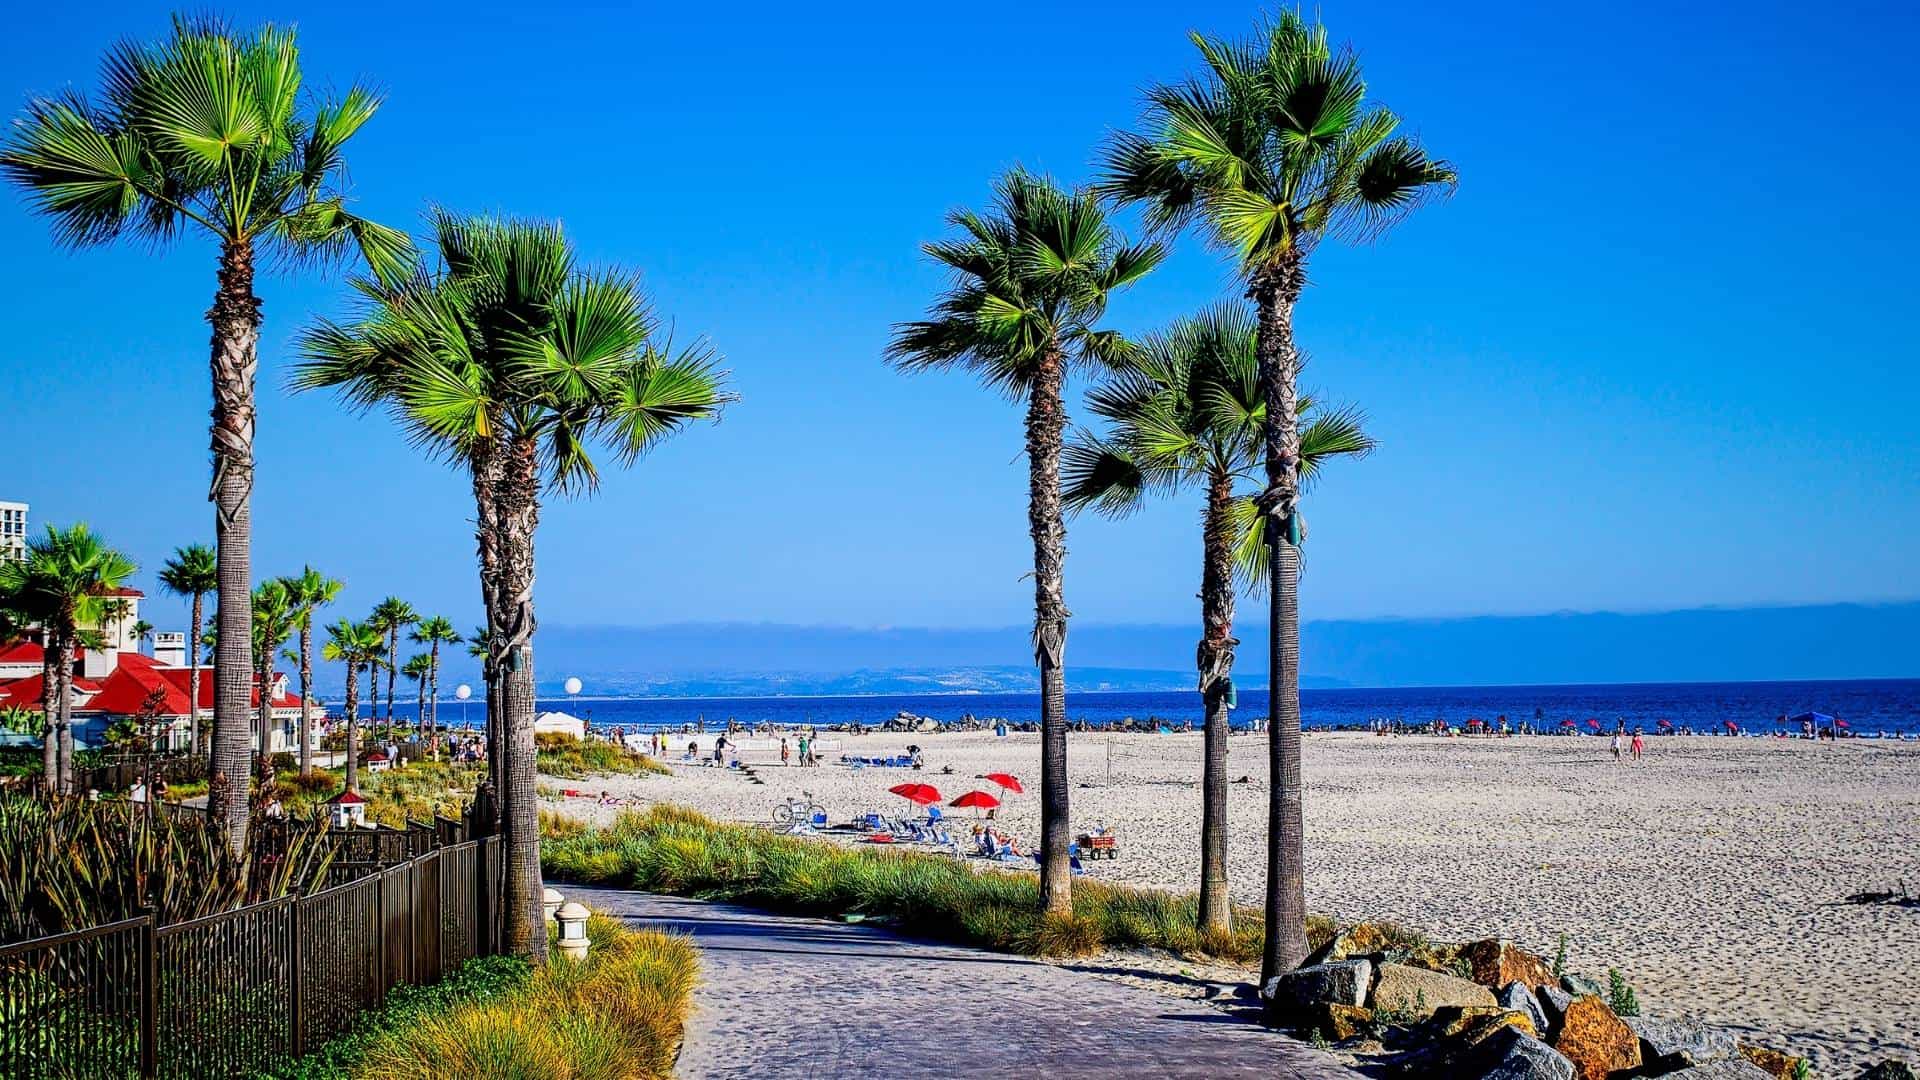 The 12 Best Beaches Near San Diego for Families